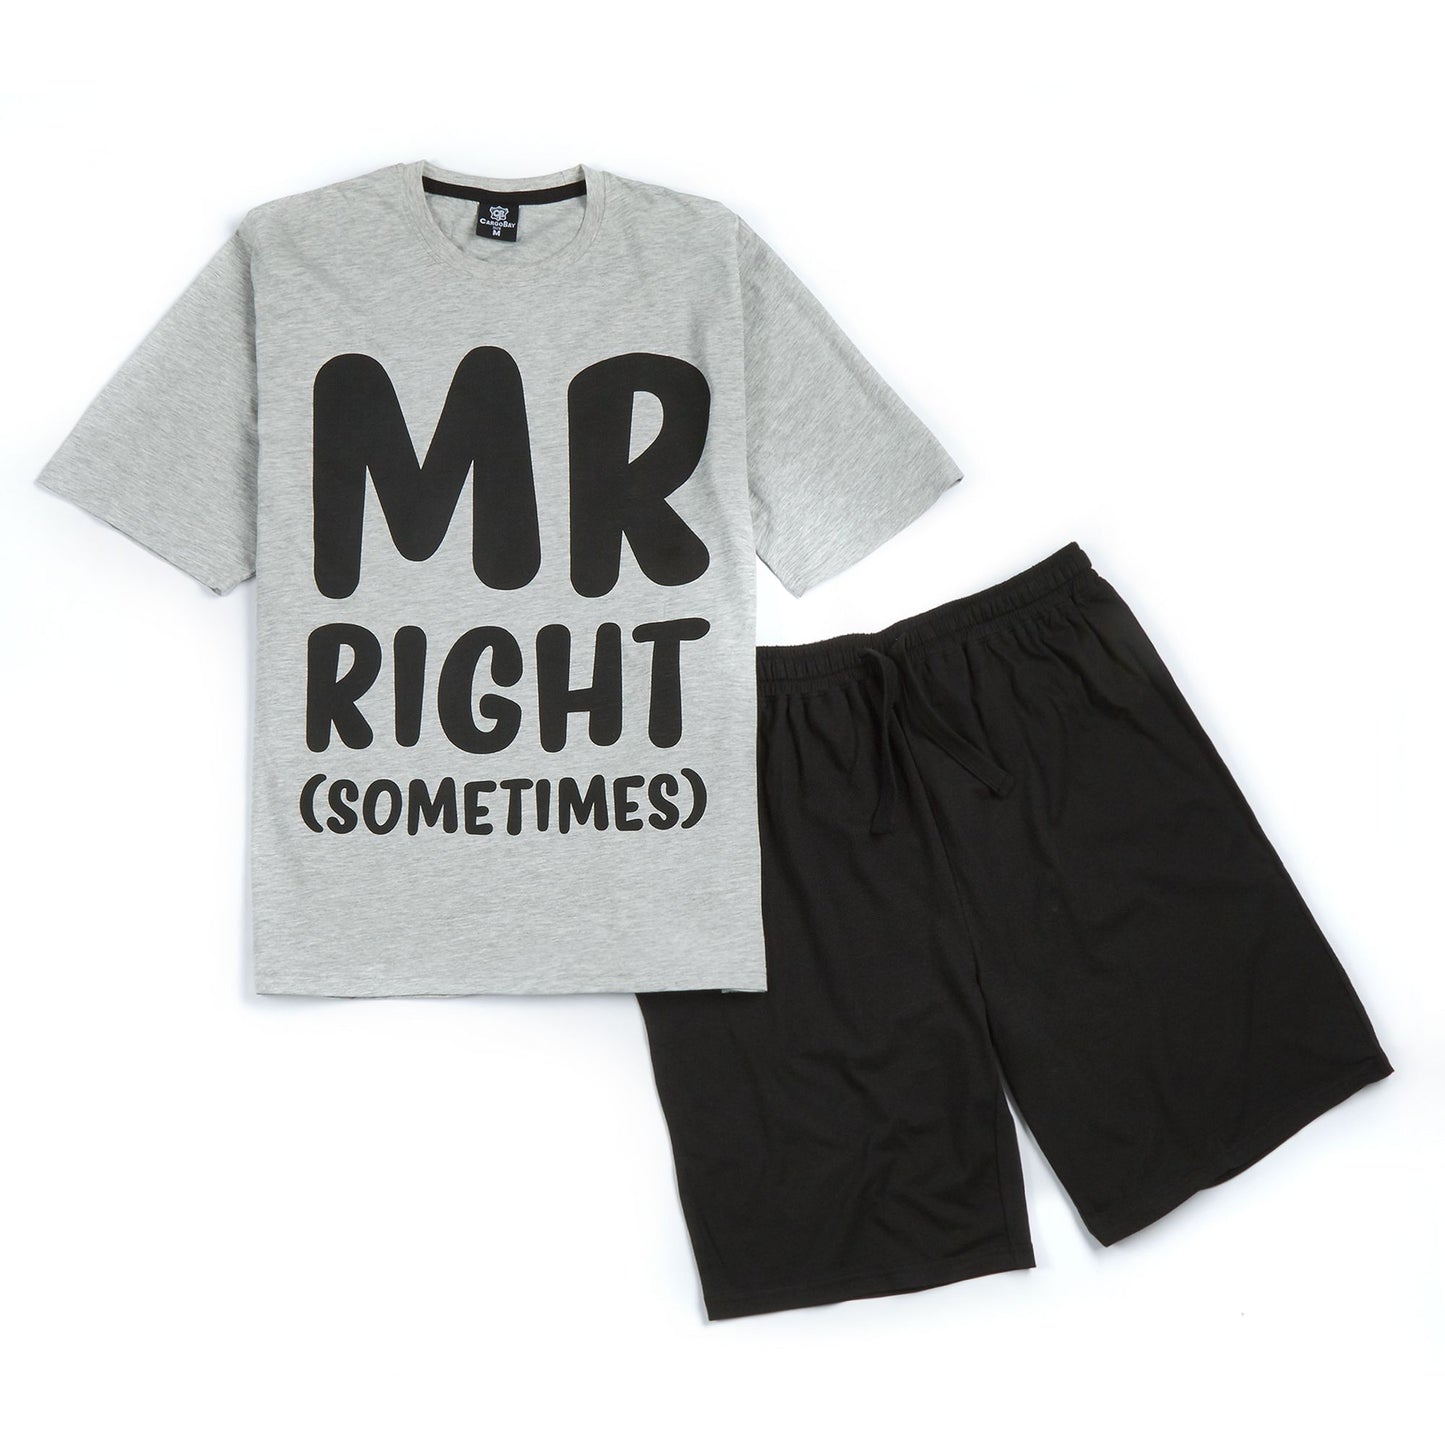 Mens Mr Sometimes Right Shorts Lounge / Pyjama Set ~ S-2XL